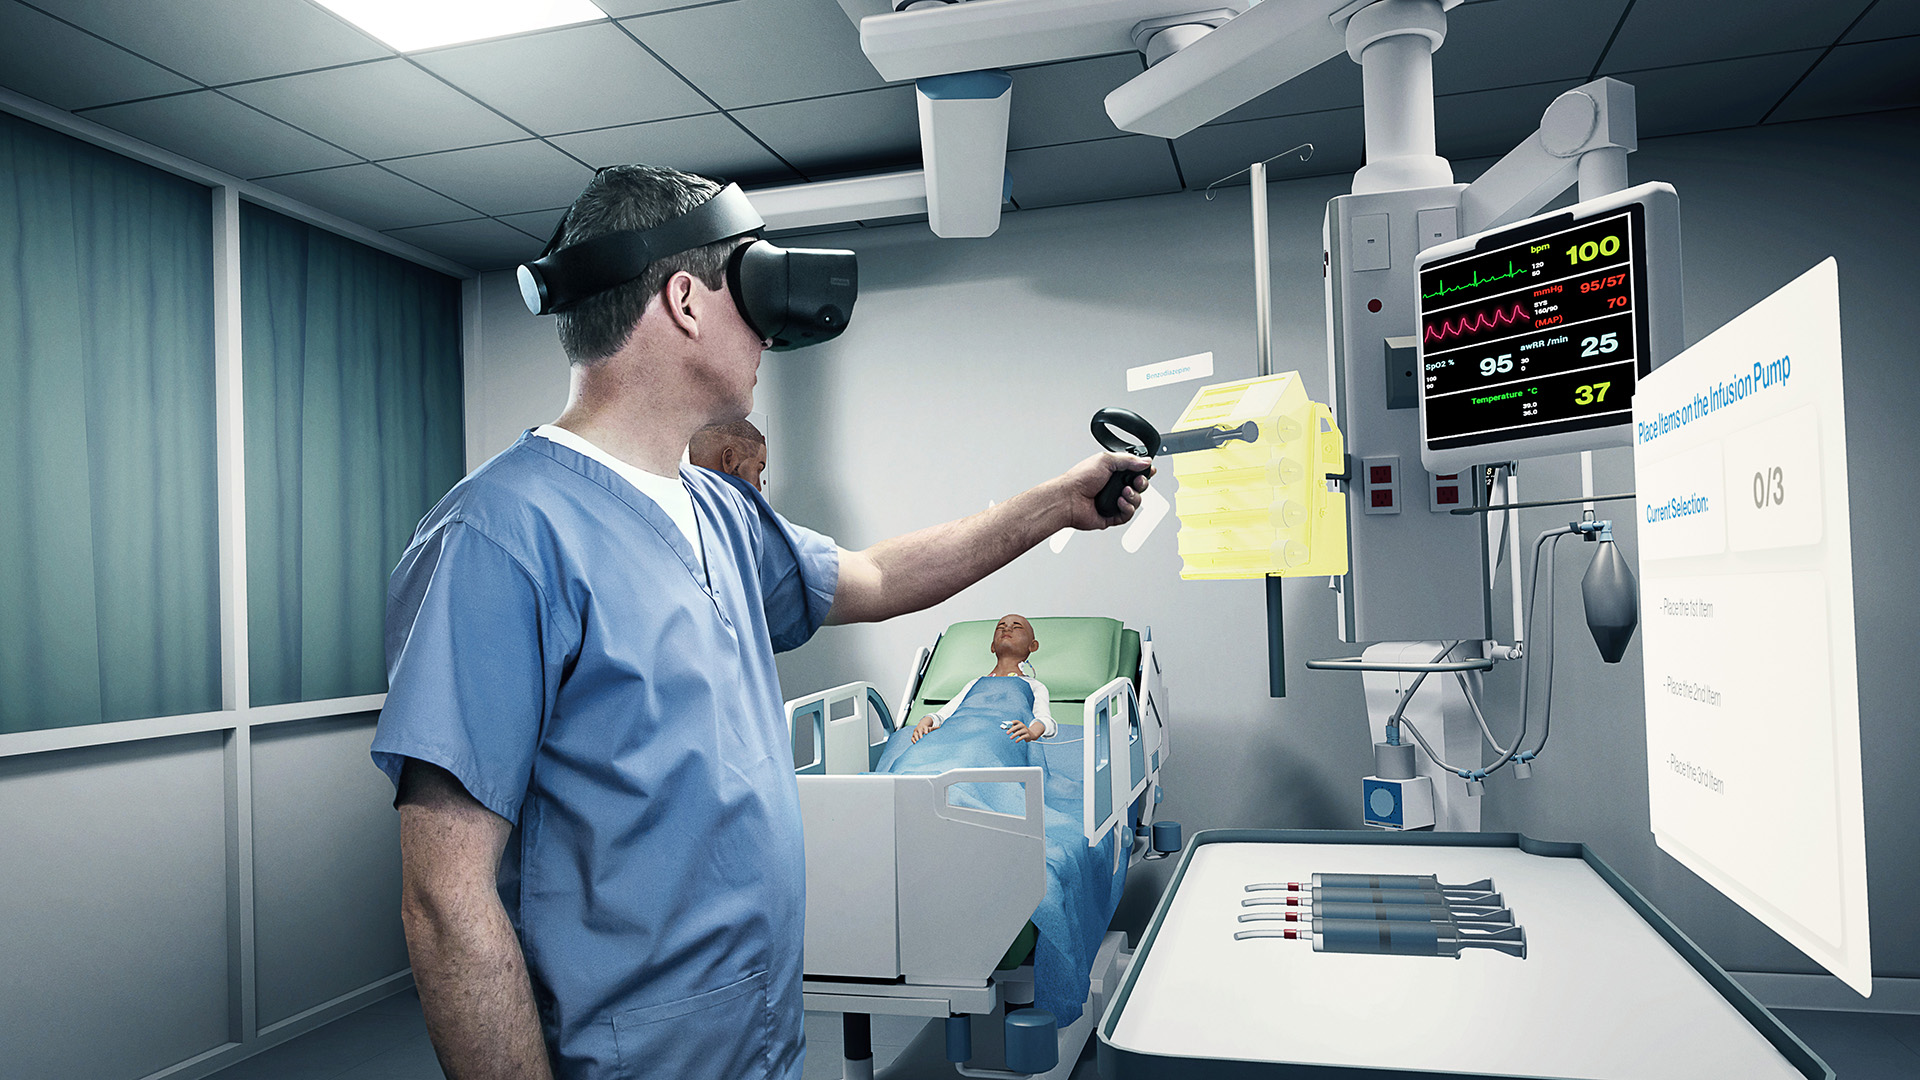 Darkroom vr. VR/ar Healthcare. Immersive VR Education. Клиника Аакаш.